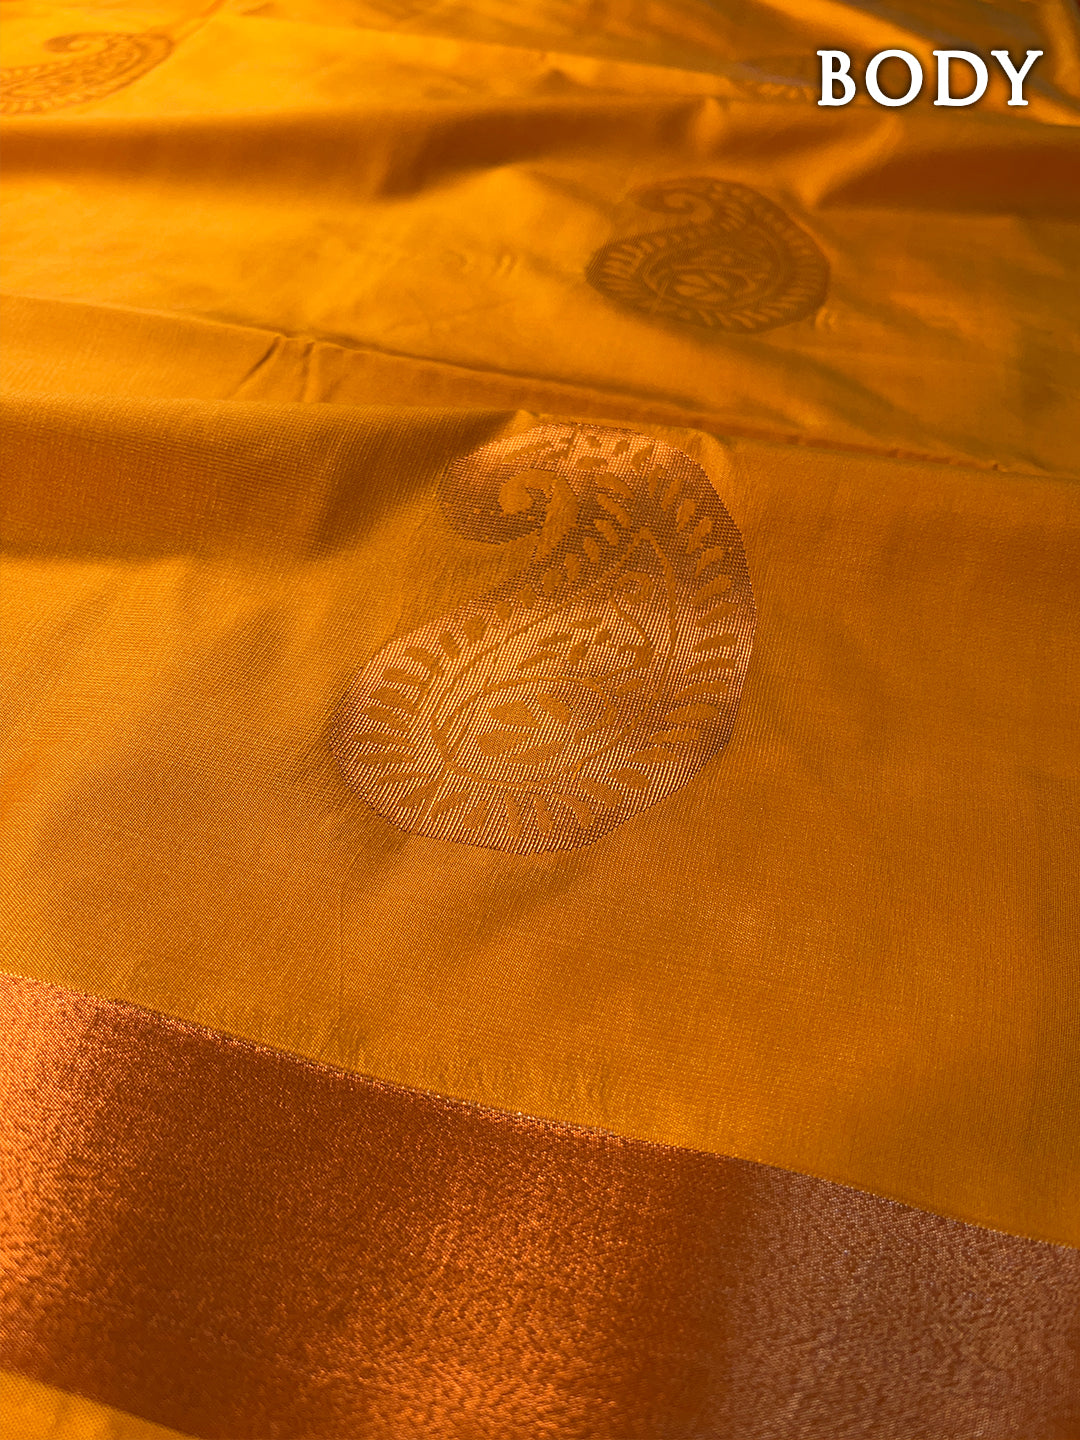 Dual color of mustard yellow and red kanchipuram semi soft silk saree